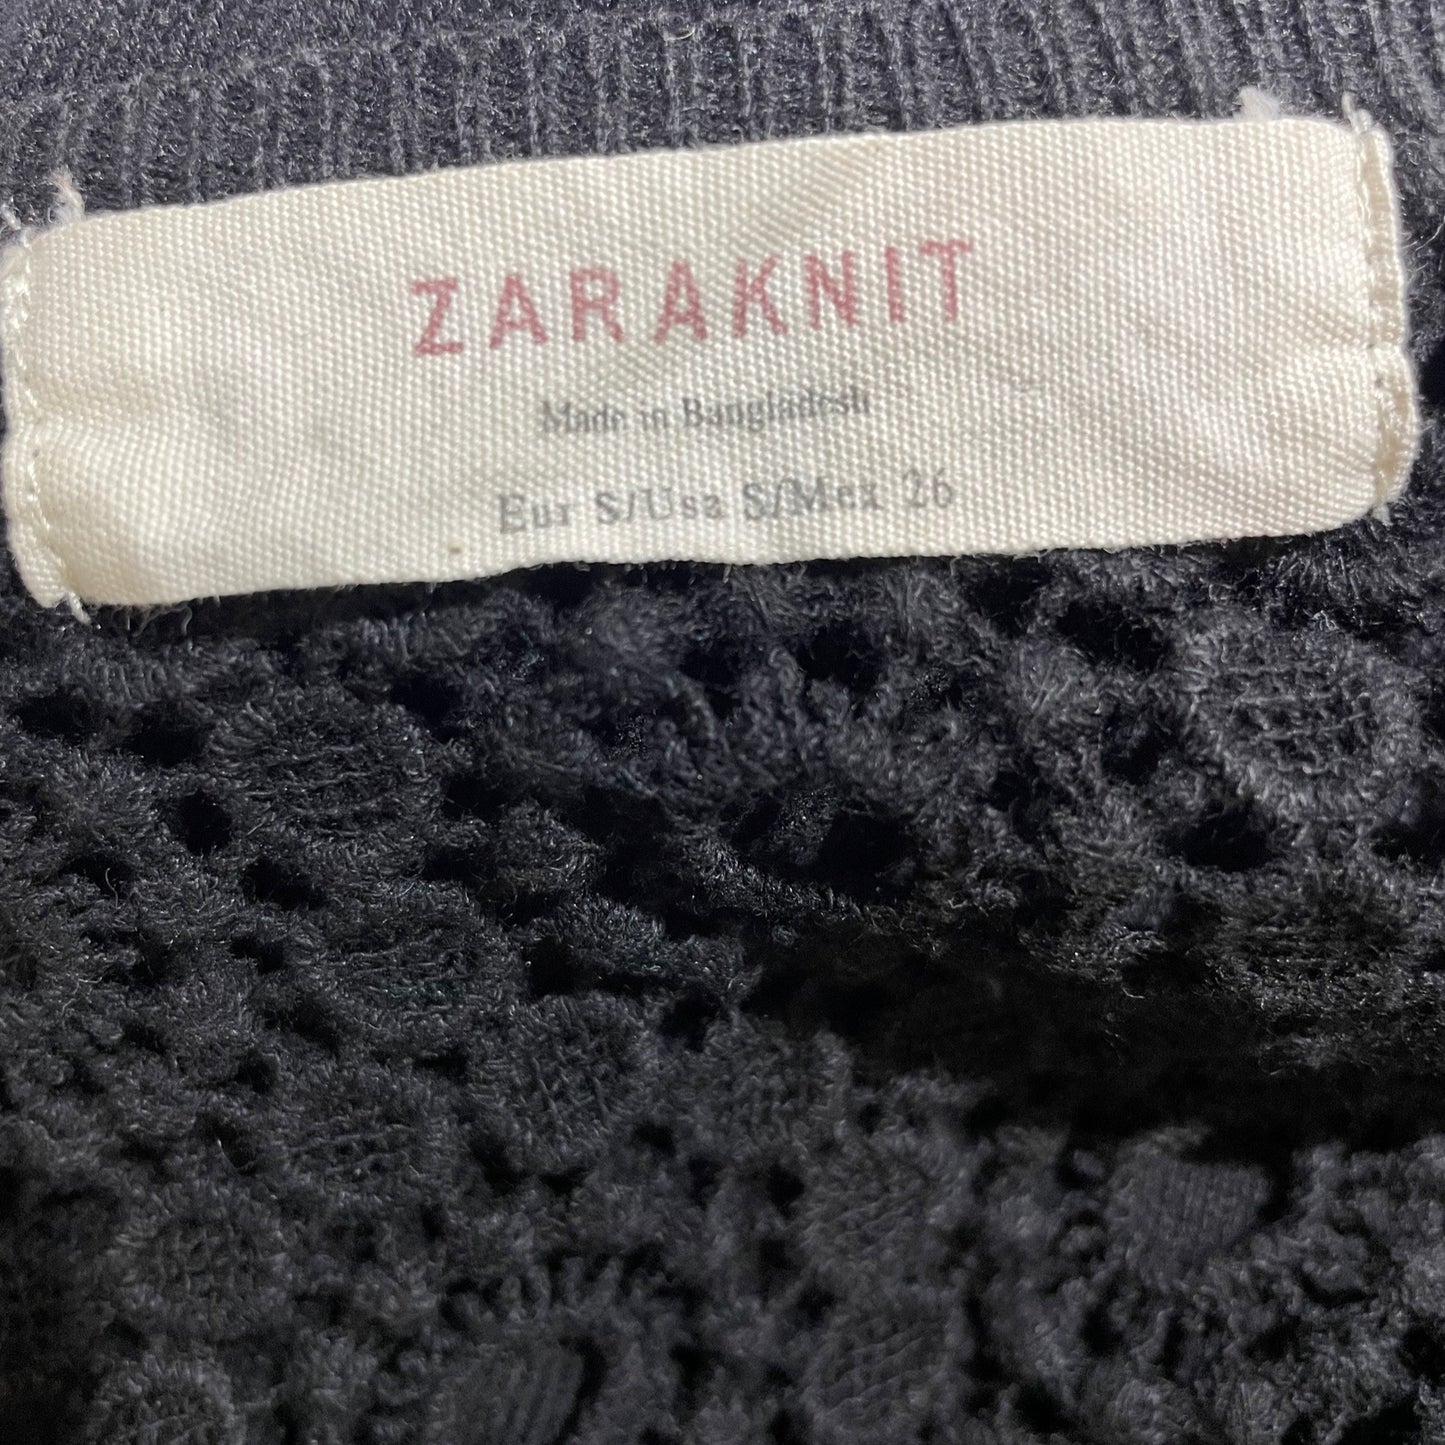 Cardigan Zara Crochet Negro - Talla S